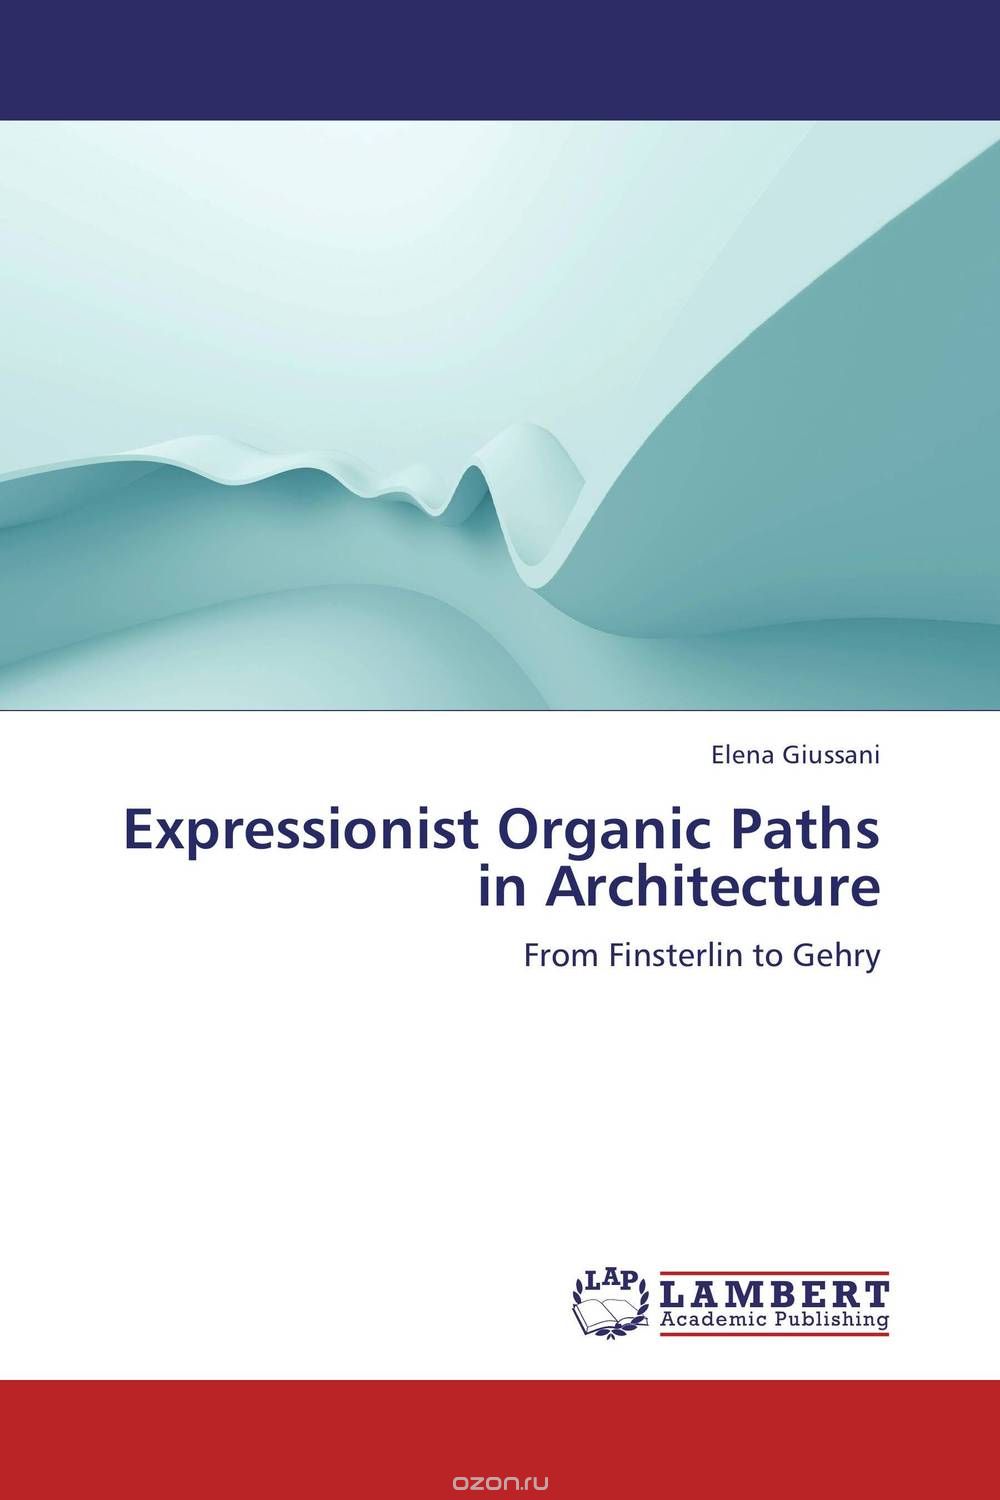 Скачать книгу "Expressionist Organic Paths in Architecture"